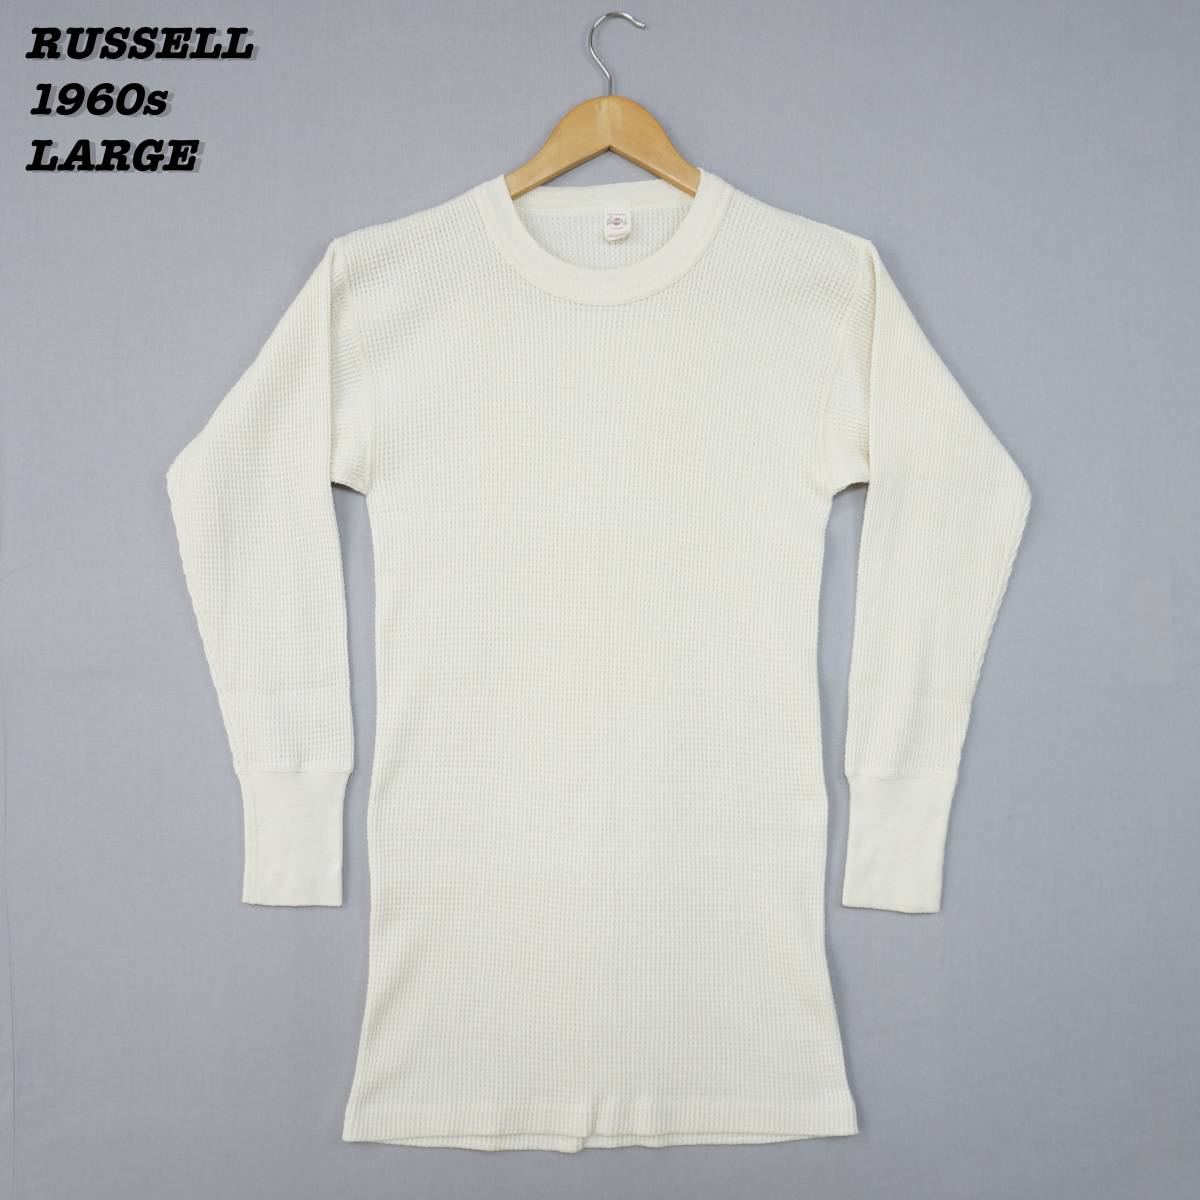 RUSSELL THERMAL LS SHIRTS 1960s USA LARGE T236 Vintage ラッセル サーマル サーマルシャツ 1960年代 アメリカ製 ヴィンテージ